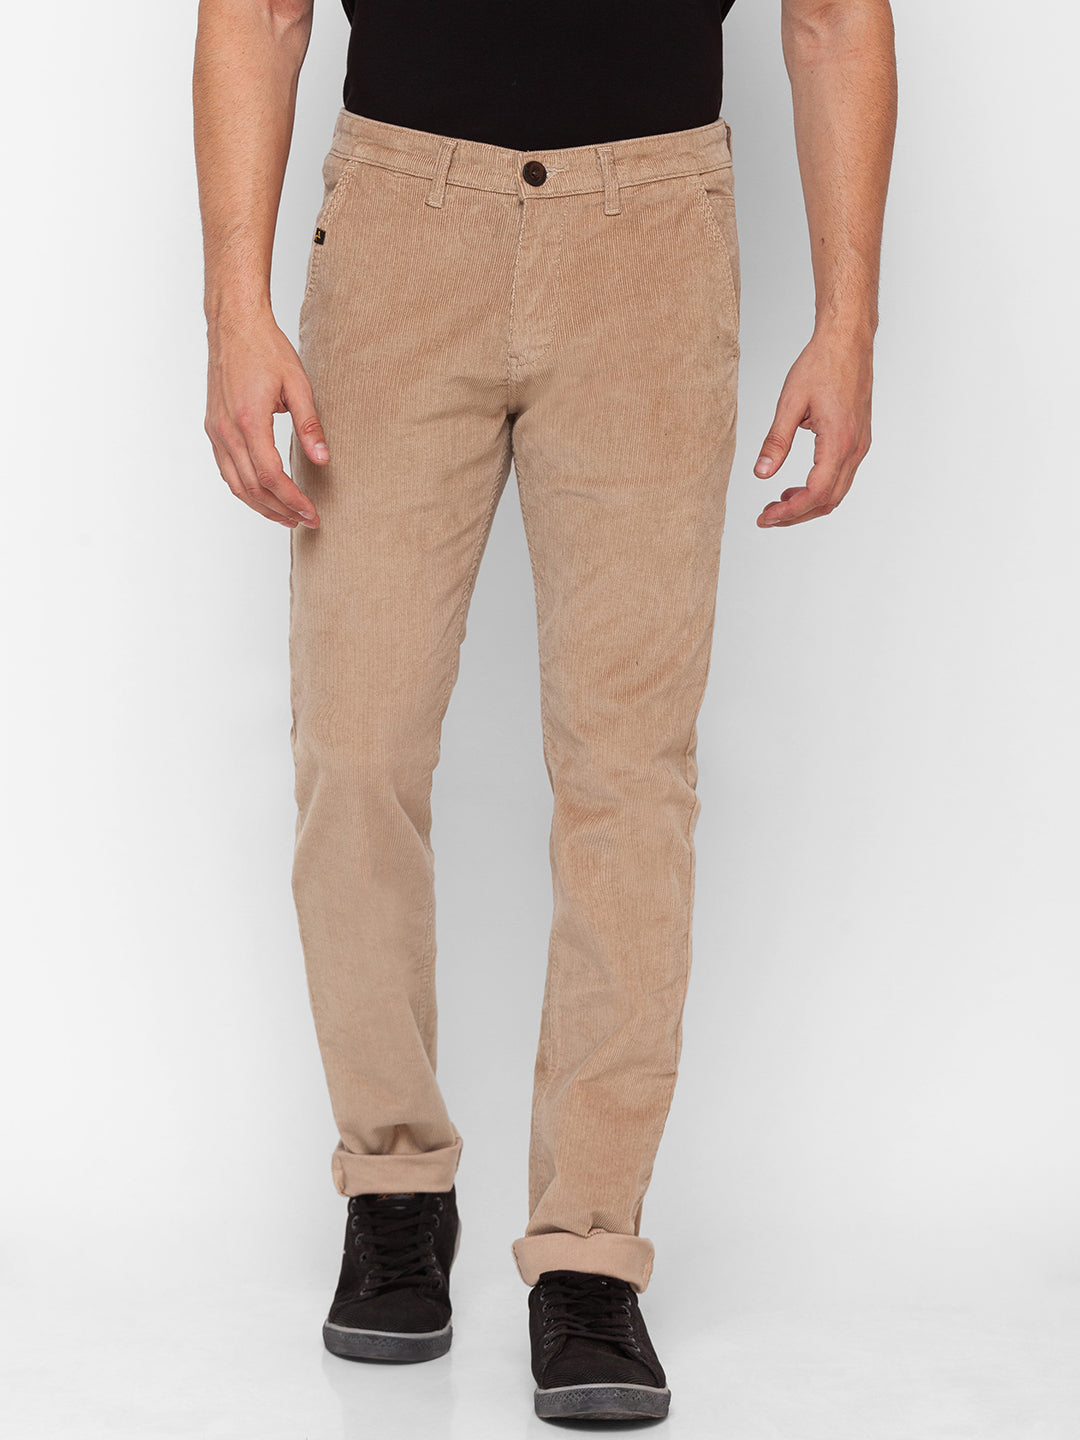 Buy OnlineSpykar Men Khaki Cotton Slim Fit Ankle Length Plain Trousers